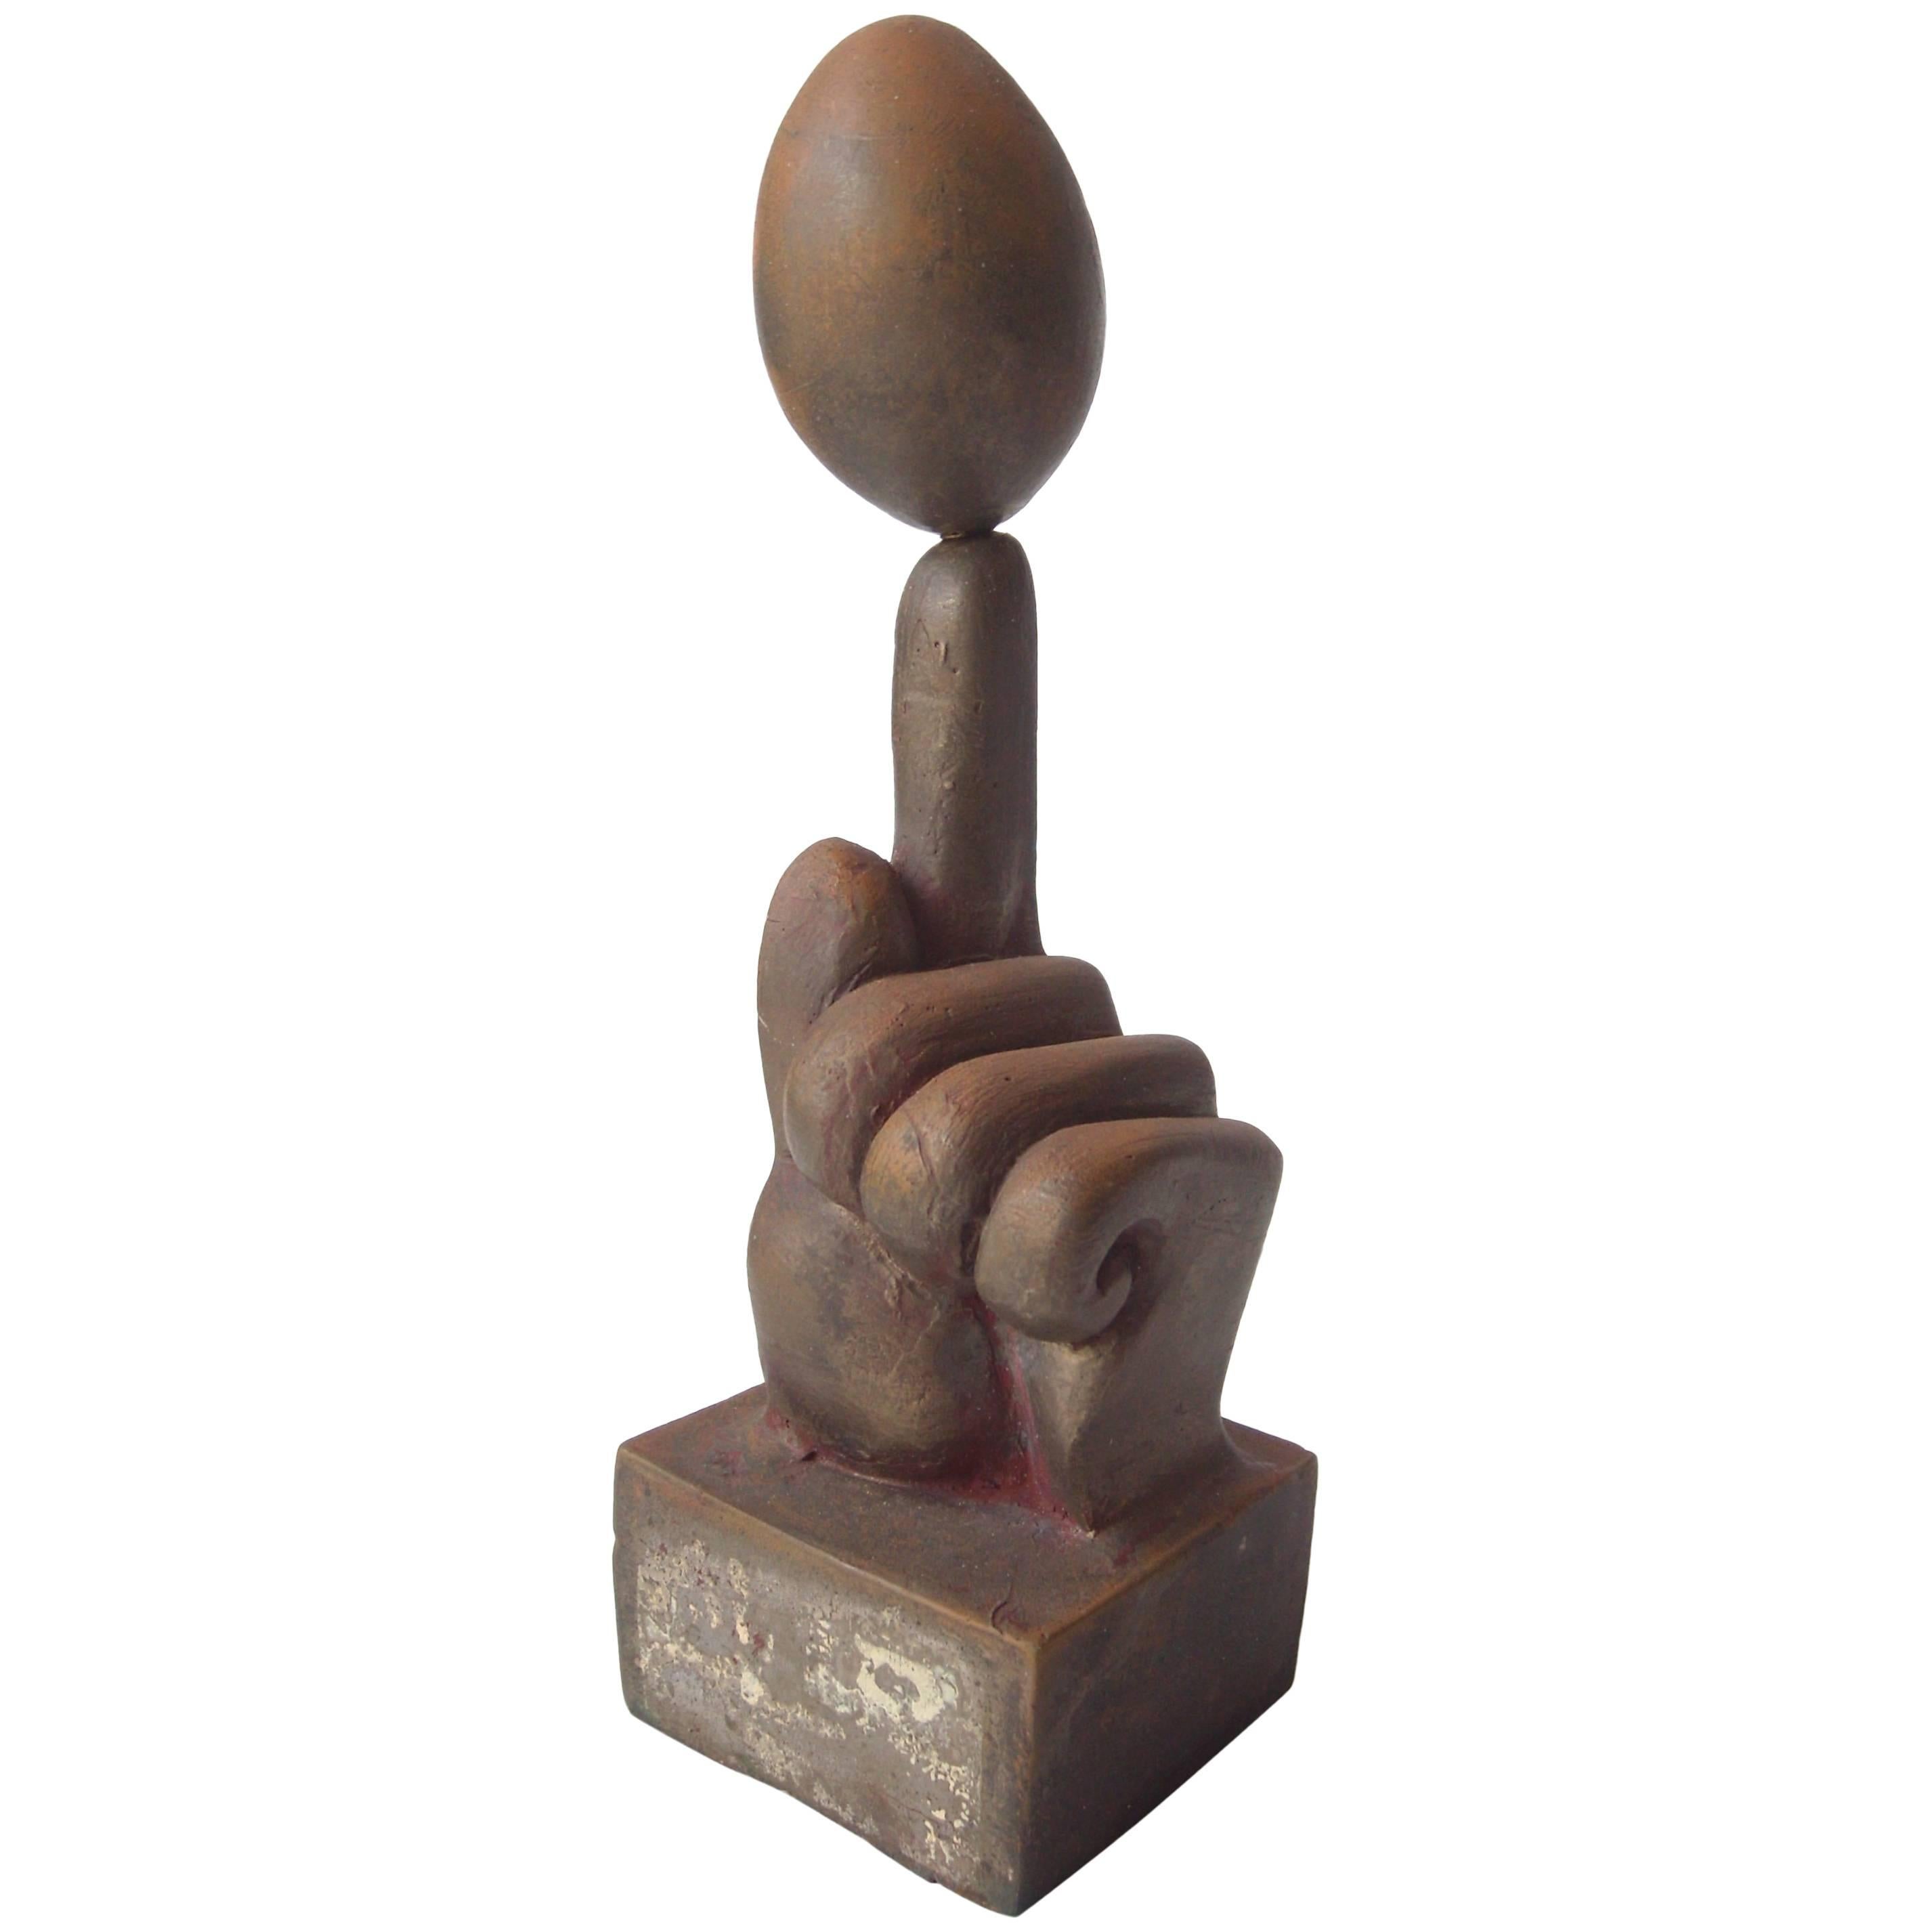 Al Hirschfeld Rare Bronze Sculpture, Signed Known as "Charlie Award"